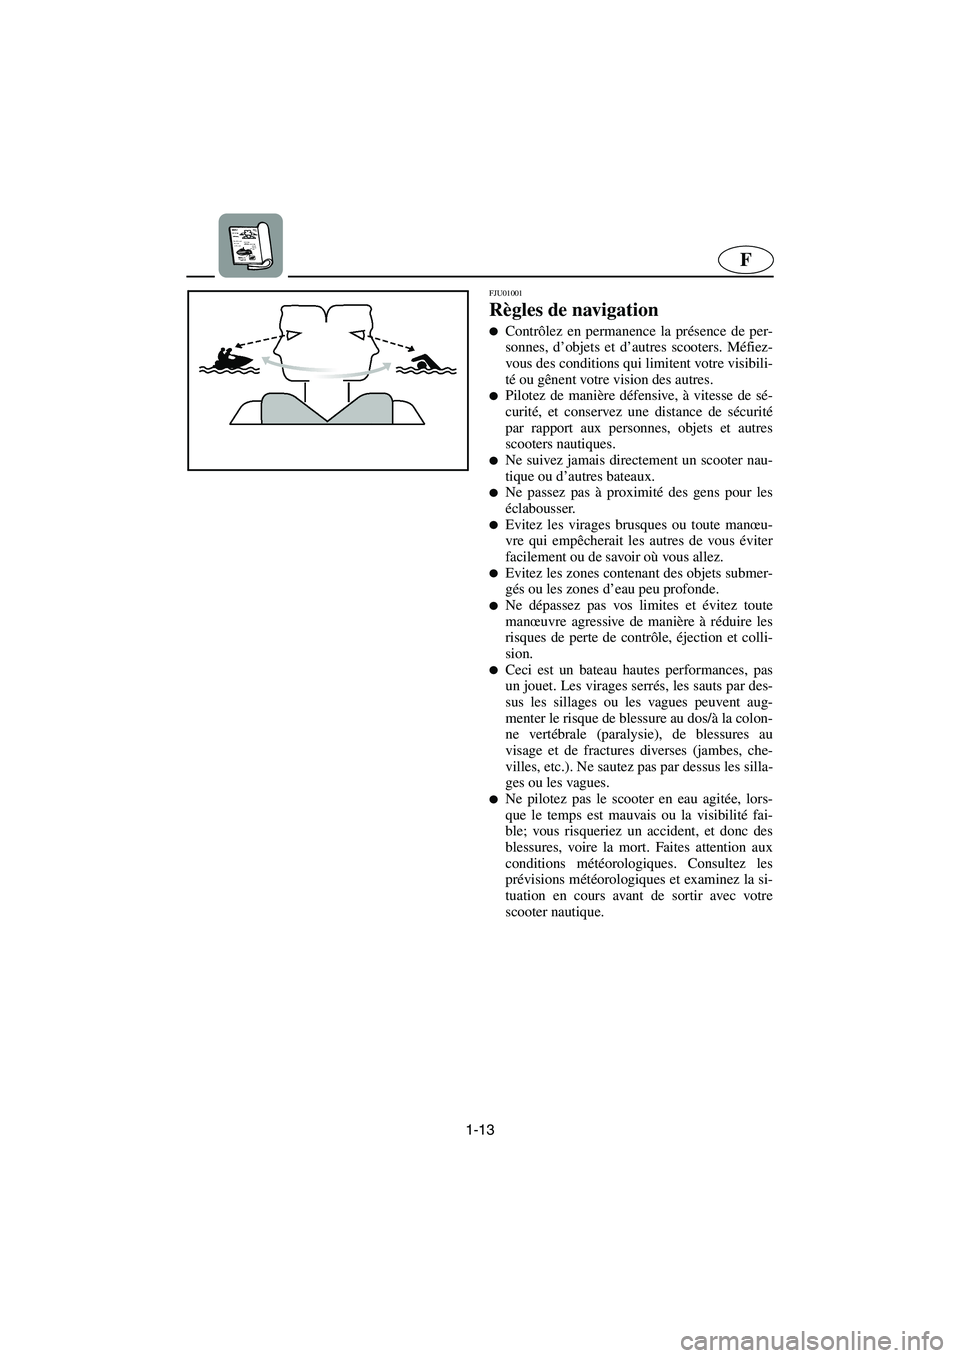 YAMAHA GP1200 2002  Manuale de Empleo (in Spanish) 1-13
F
FJU01001 
Règles de navigation  
Contrôlez en permanence la présence de per-
sonnes, d’objets et d’autres scooters. Méfiez-
vous des conditions qui limitent votre visibili-
té ou gên